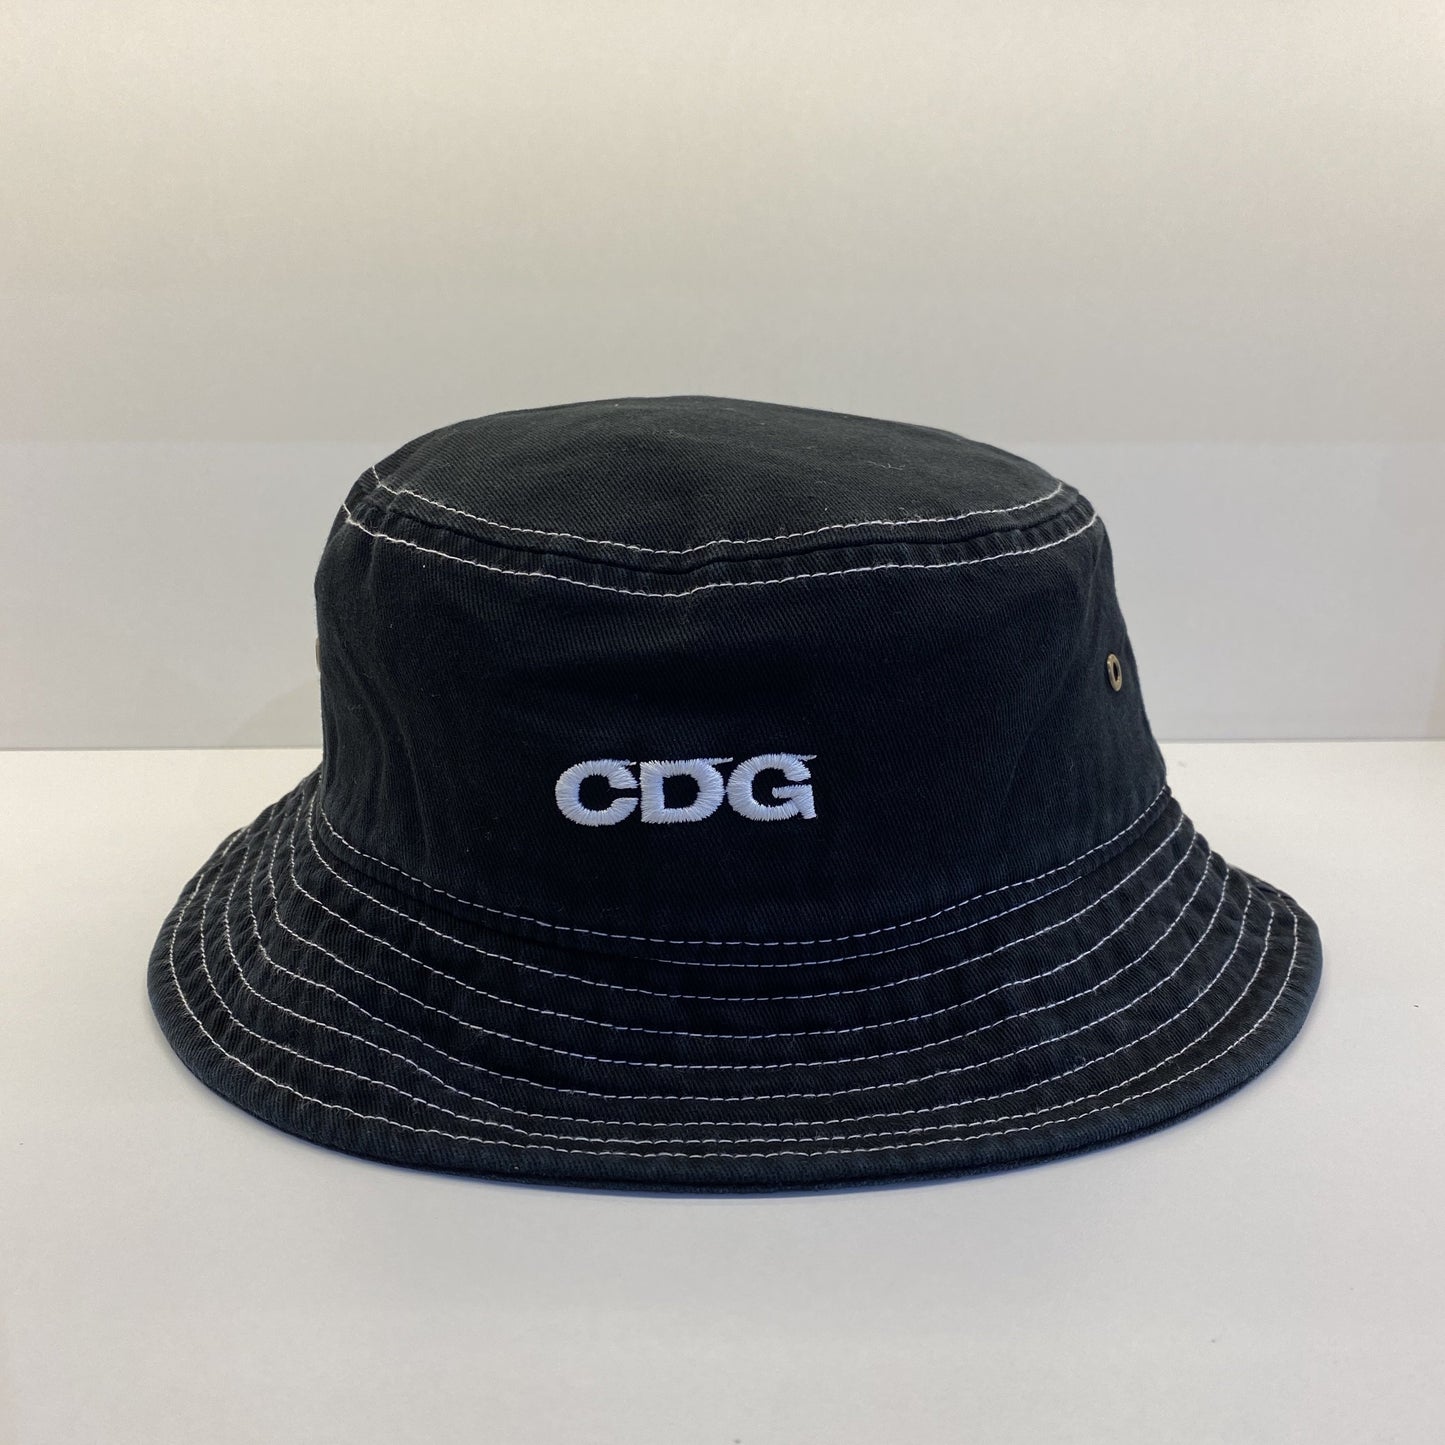 CDG (comme des garcons) Bucket Hat